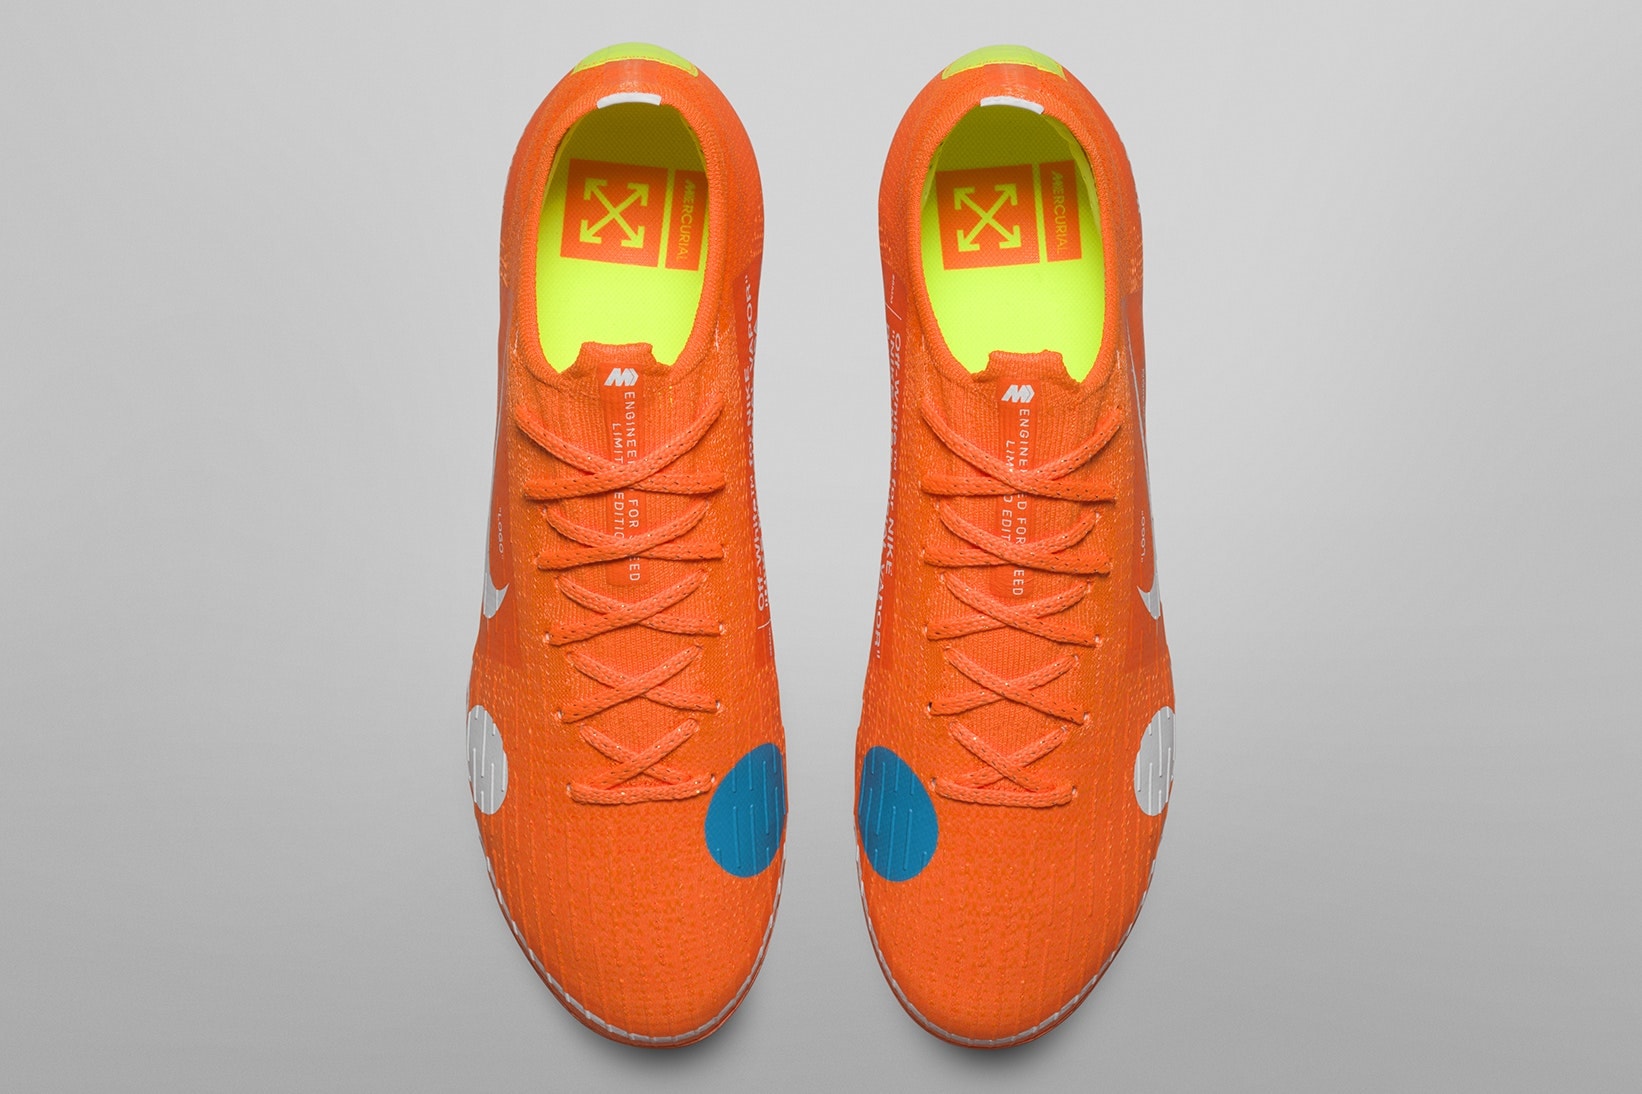 Virgil Abloh x Nike Mercurial Vapor 360 聯名足球鞋發售詳情公開